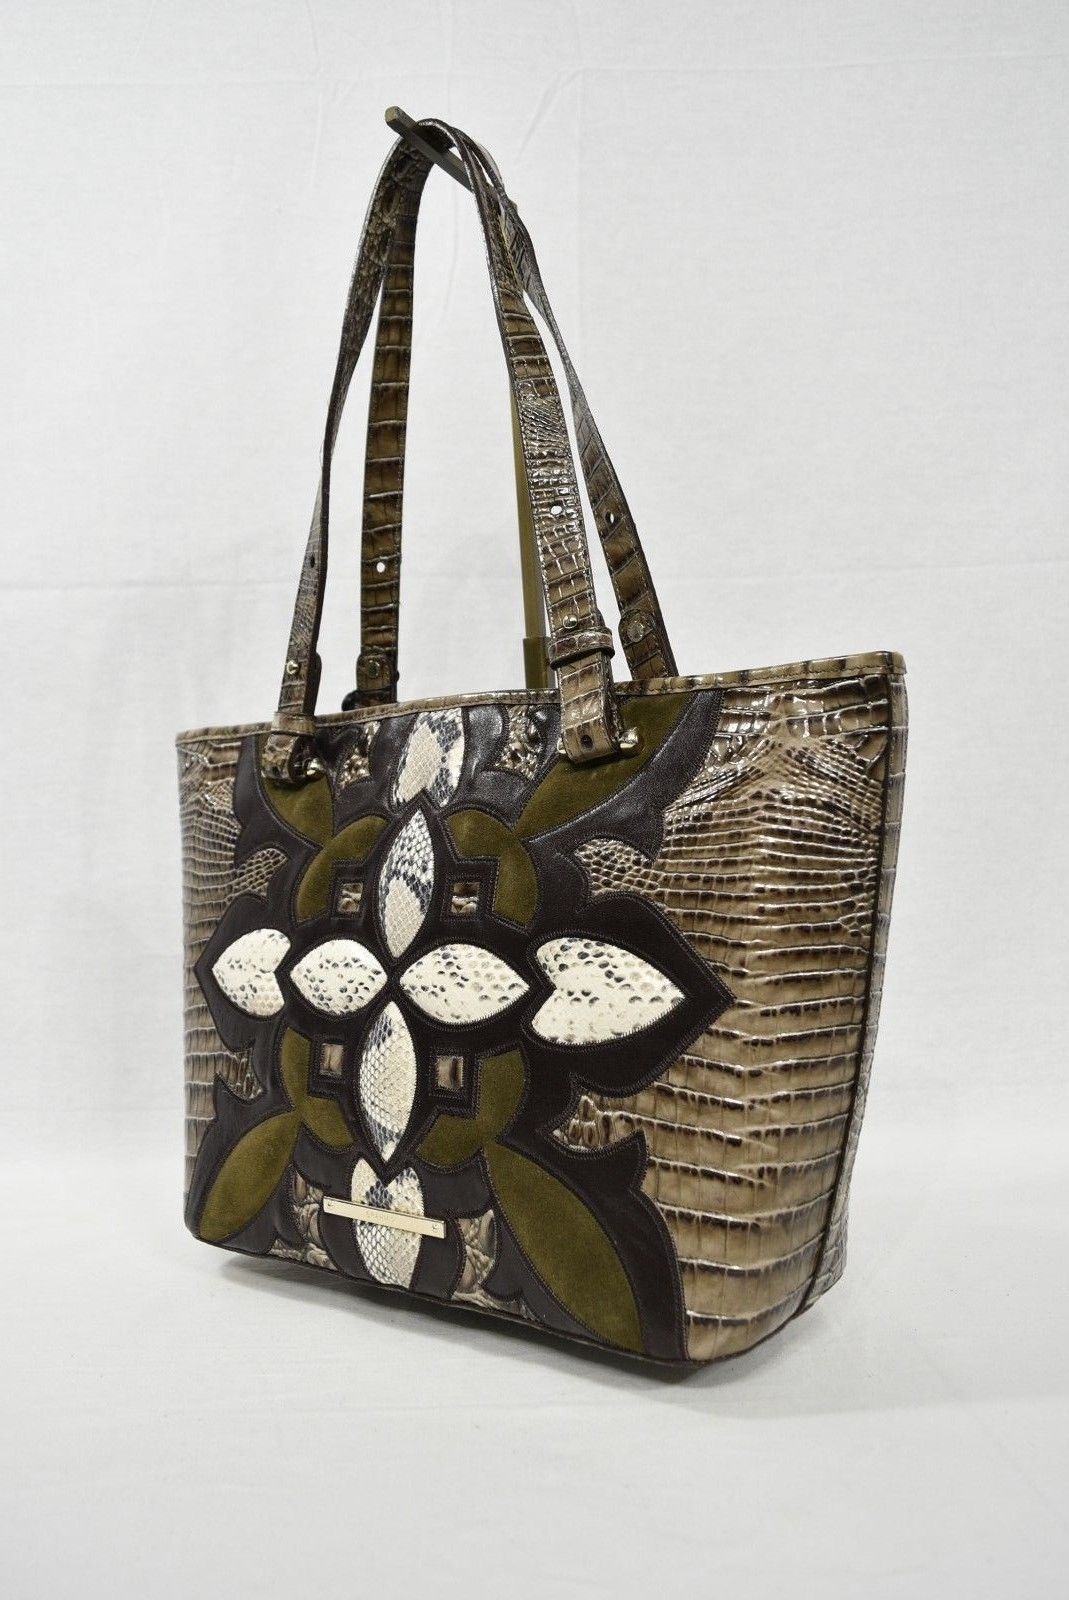 Shoulder Bag in Latte Buena Vista Tri-Texture NWT Brahmin Joan Leather Tote 